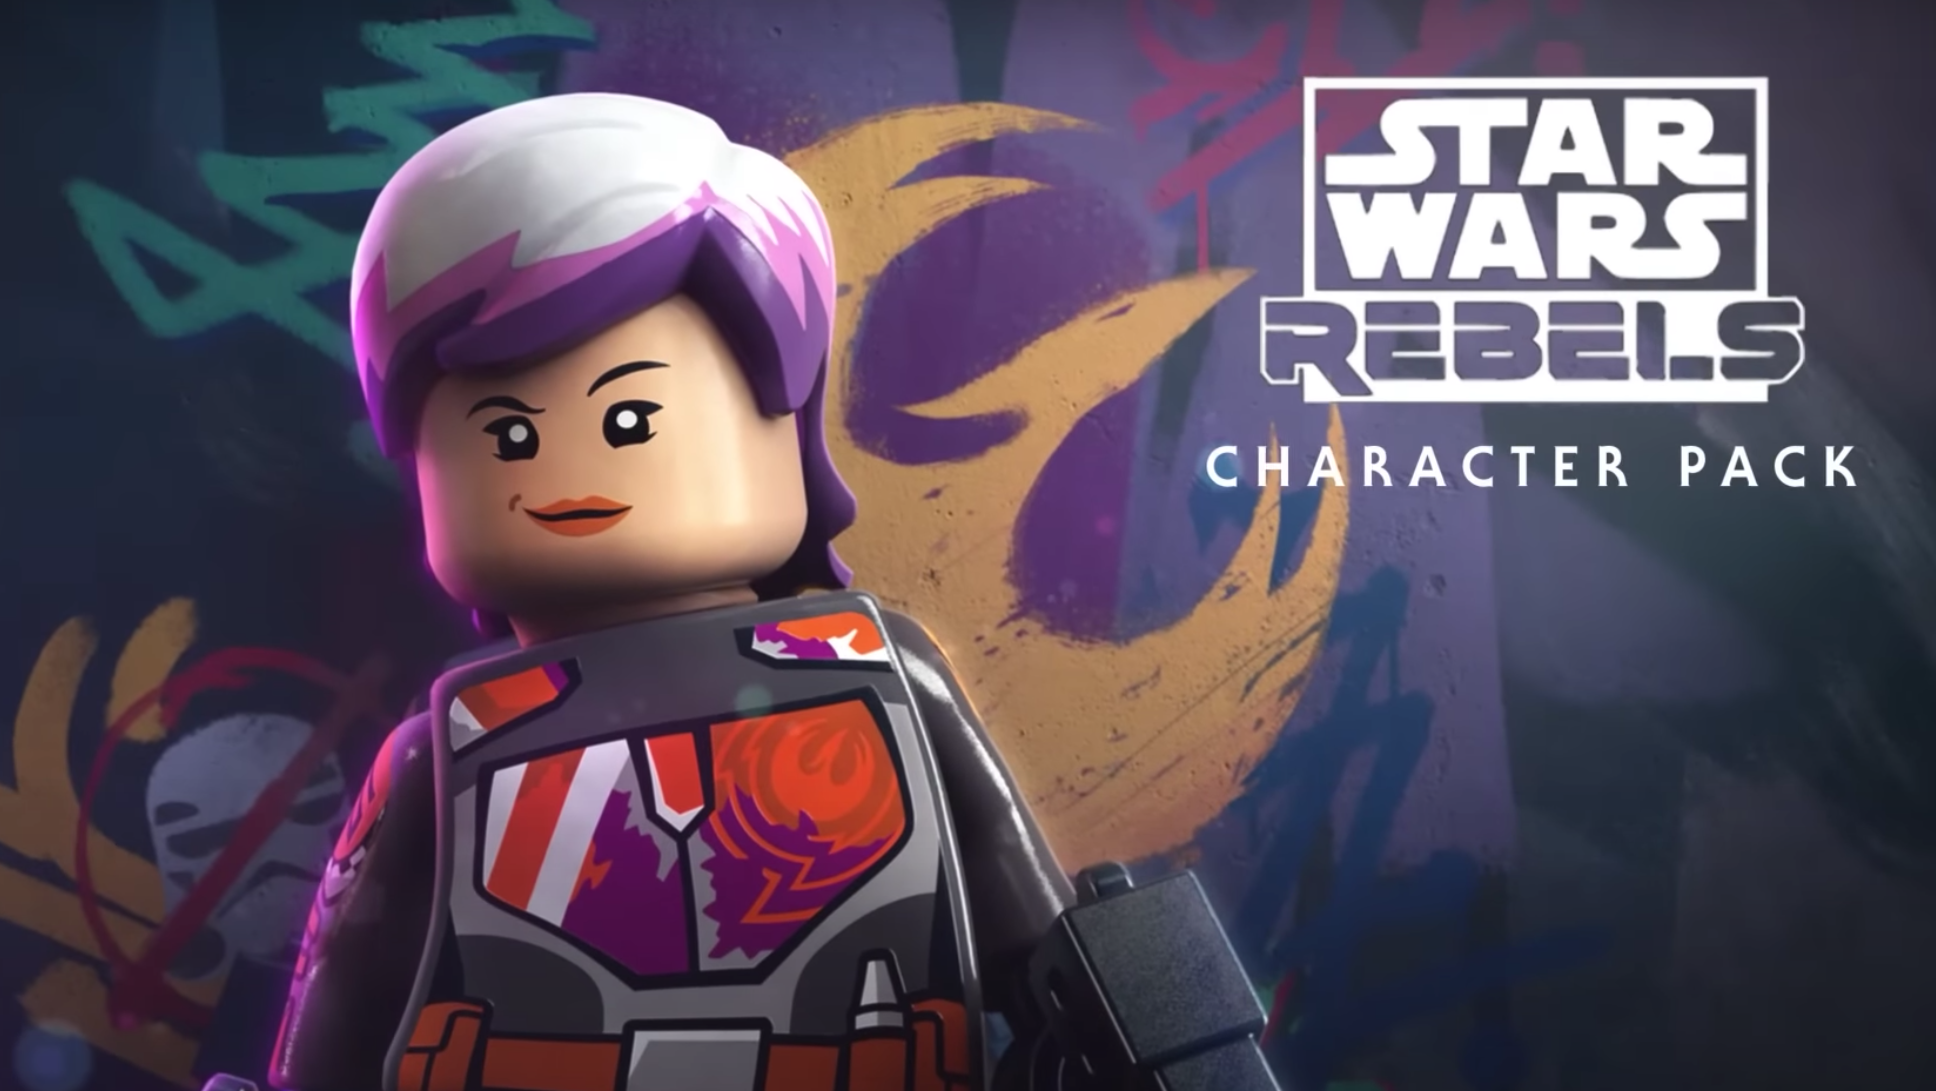 LEGO Star Wars: The Skywalker Saga Receives Exciting Release Update